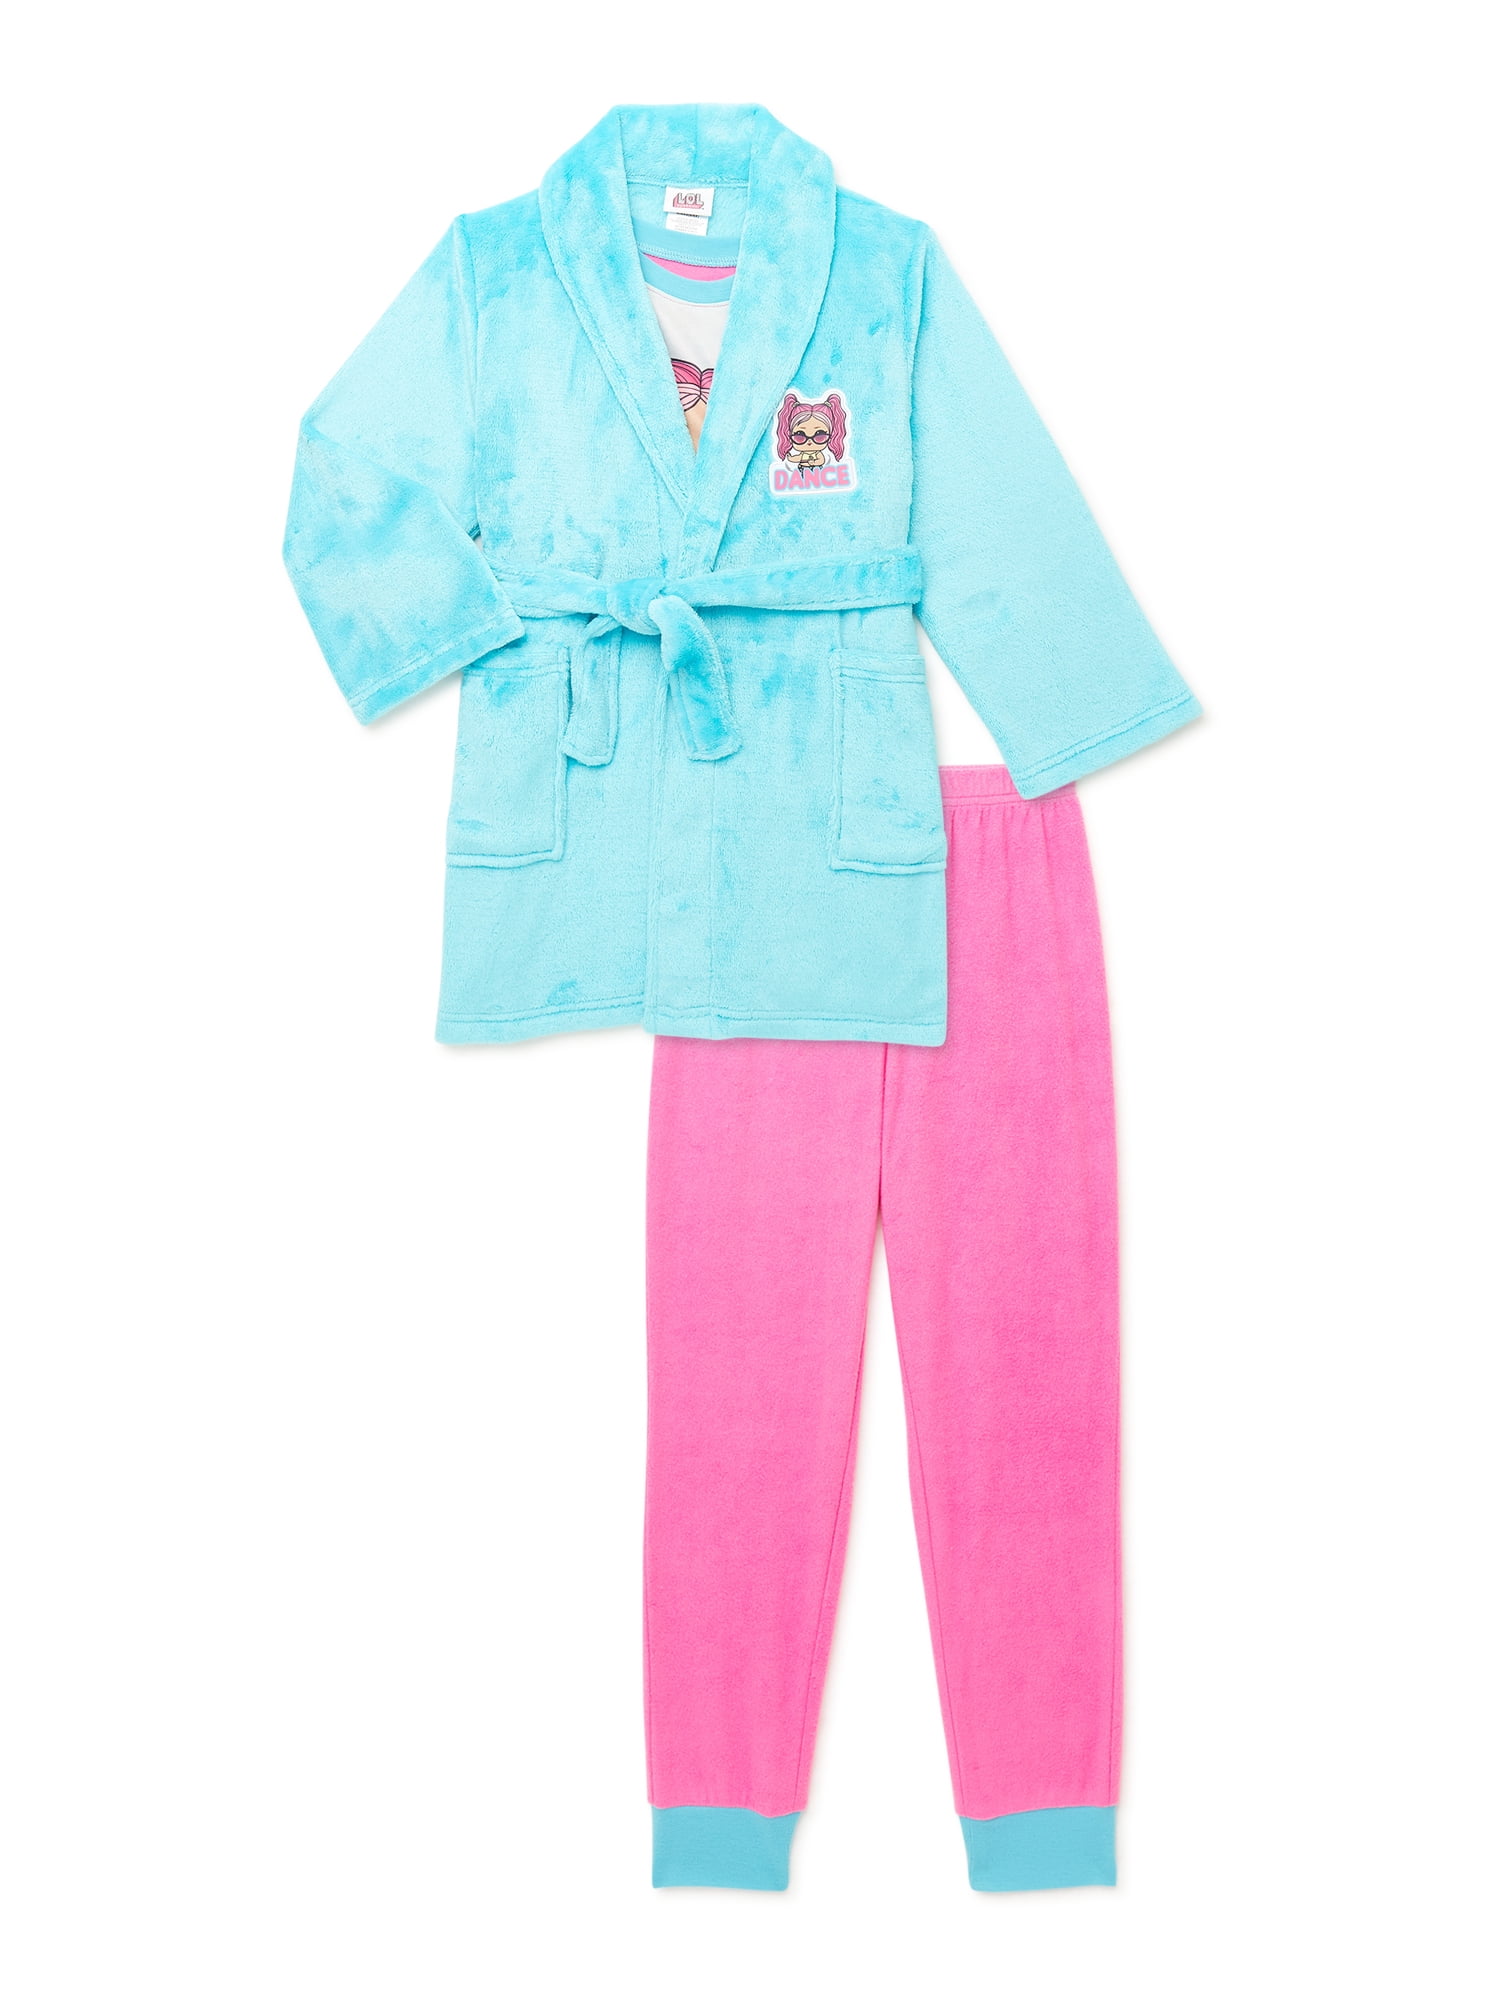 Boys Spidey Robe Plush Pajamas Set Shirt Pants Hooded Bathrobe 3pc 